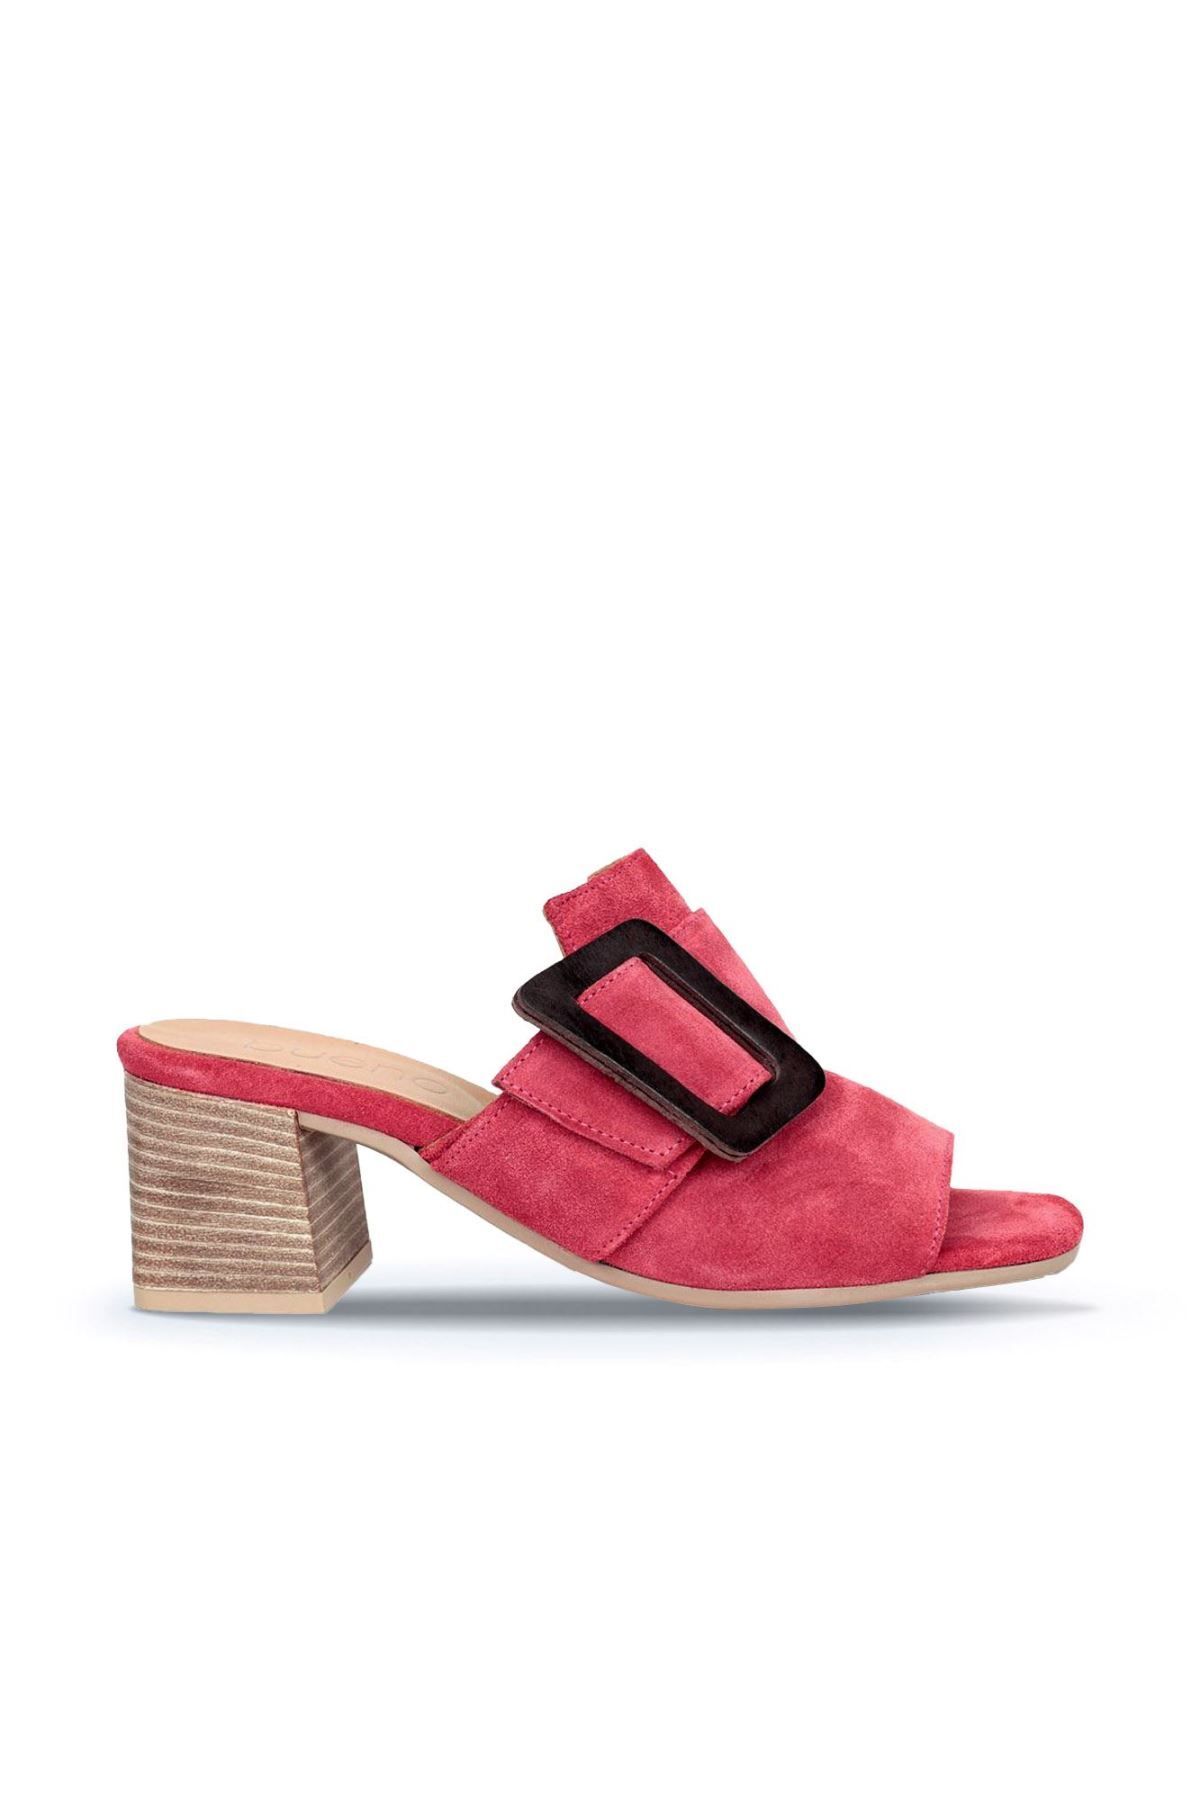 BUENO Shoes Kırmızı Süet Kadın Topuklu Terlik